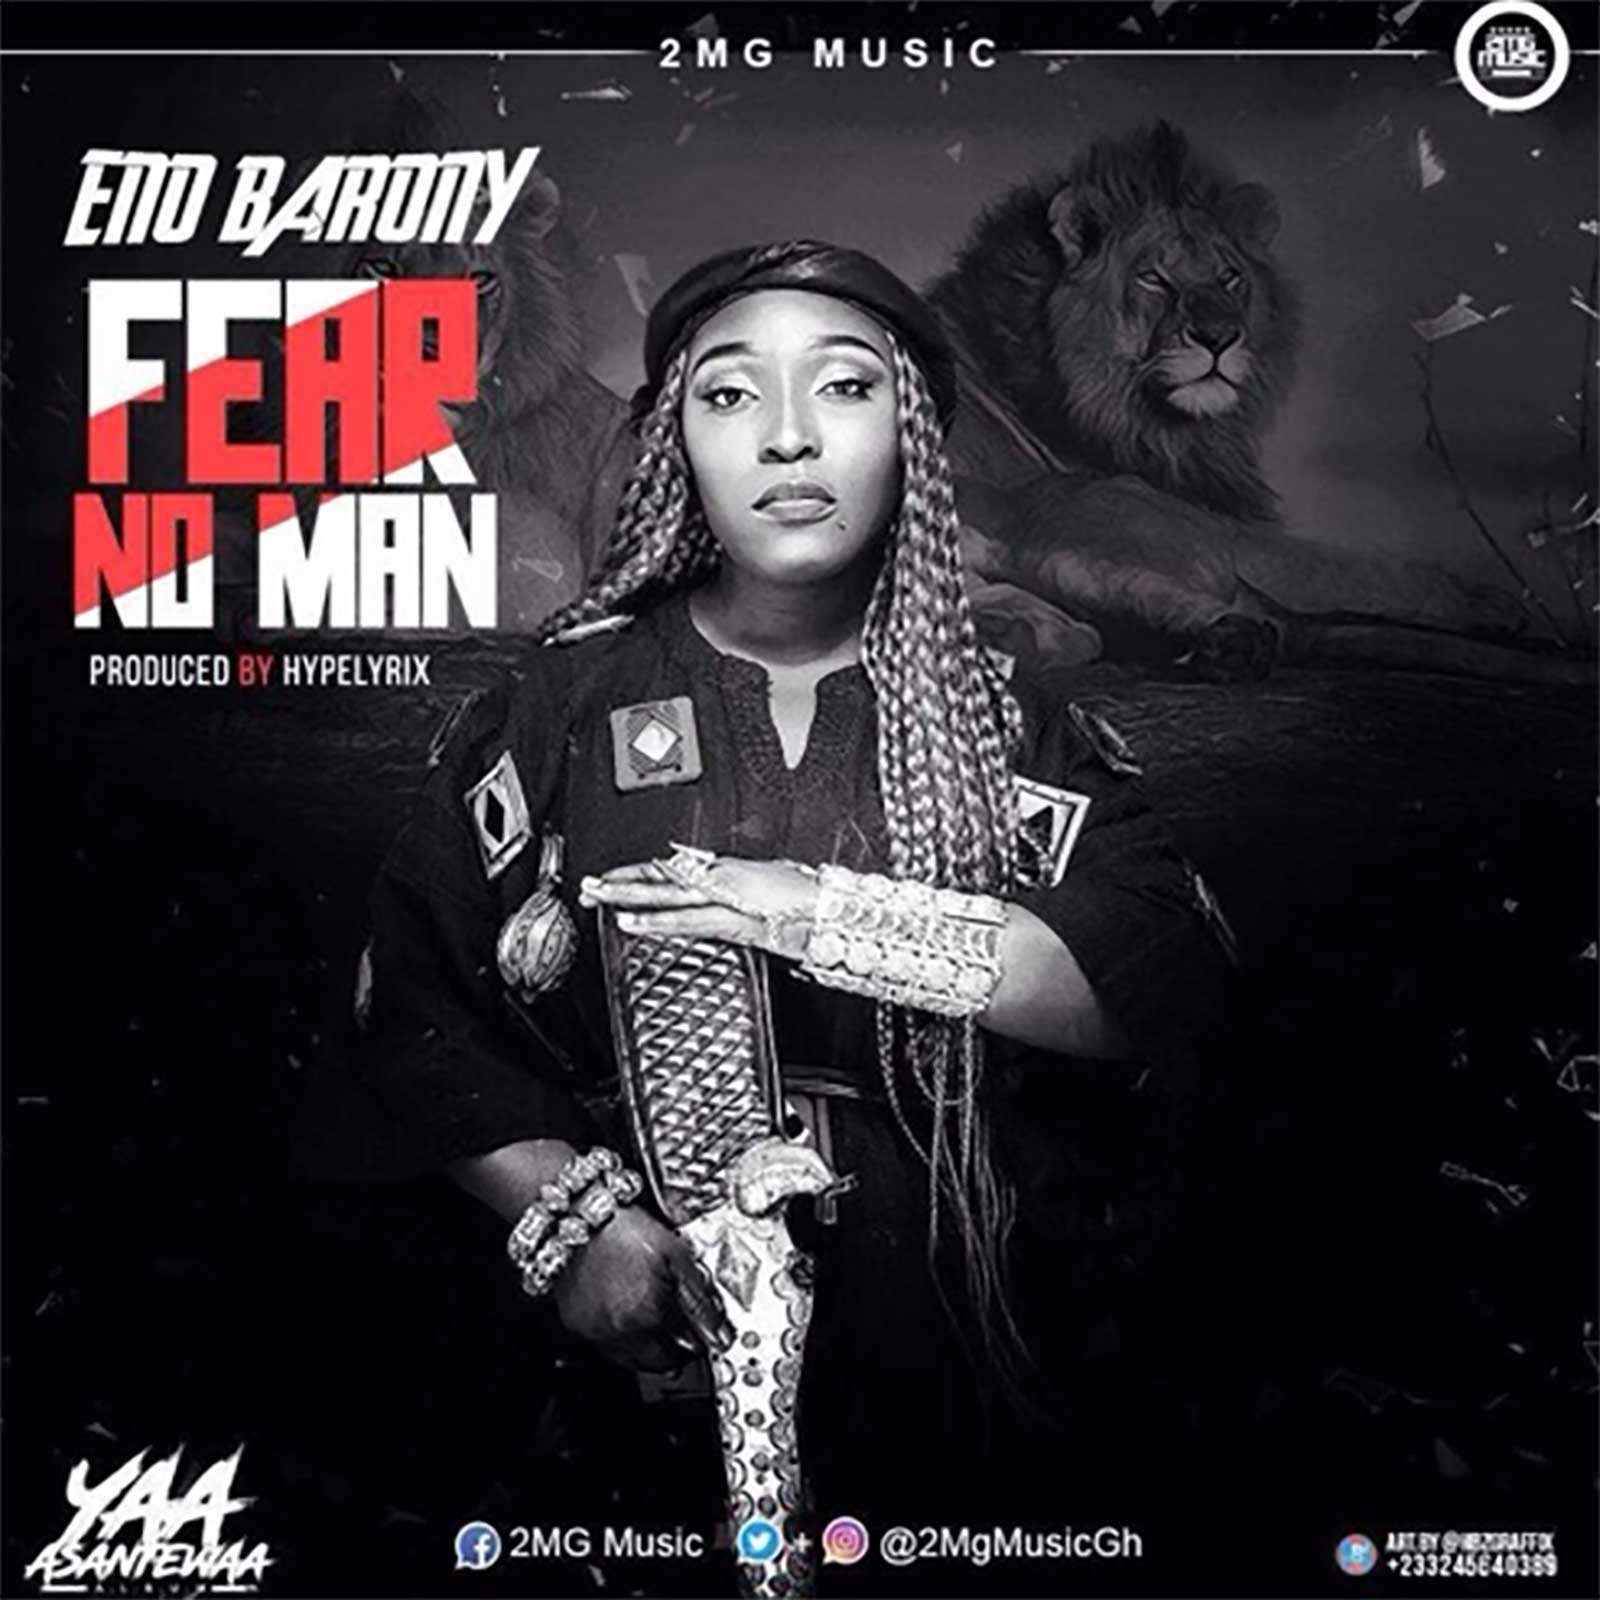 Fear No Man by Eno Barony